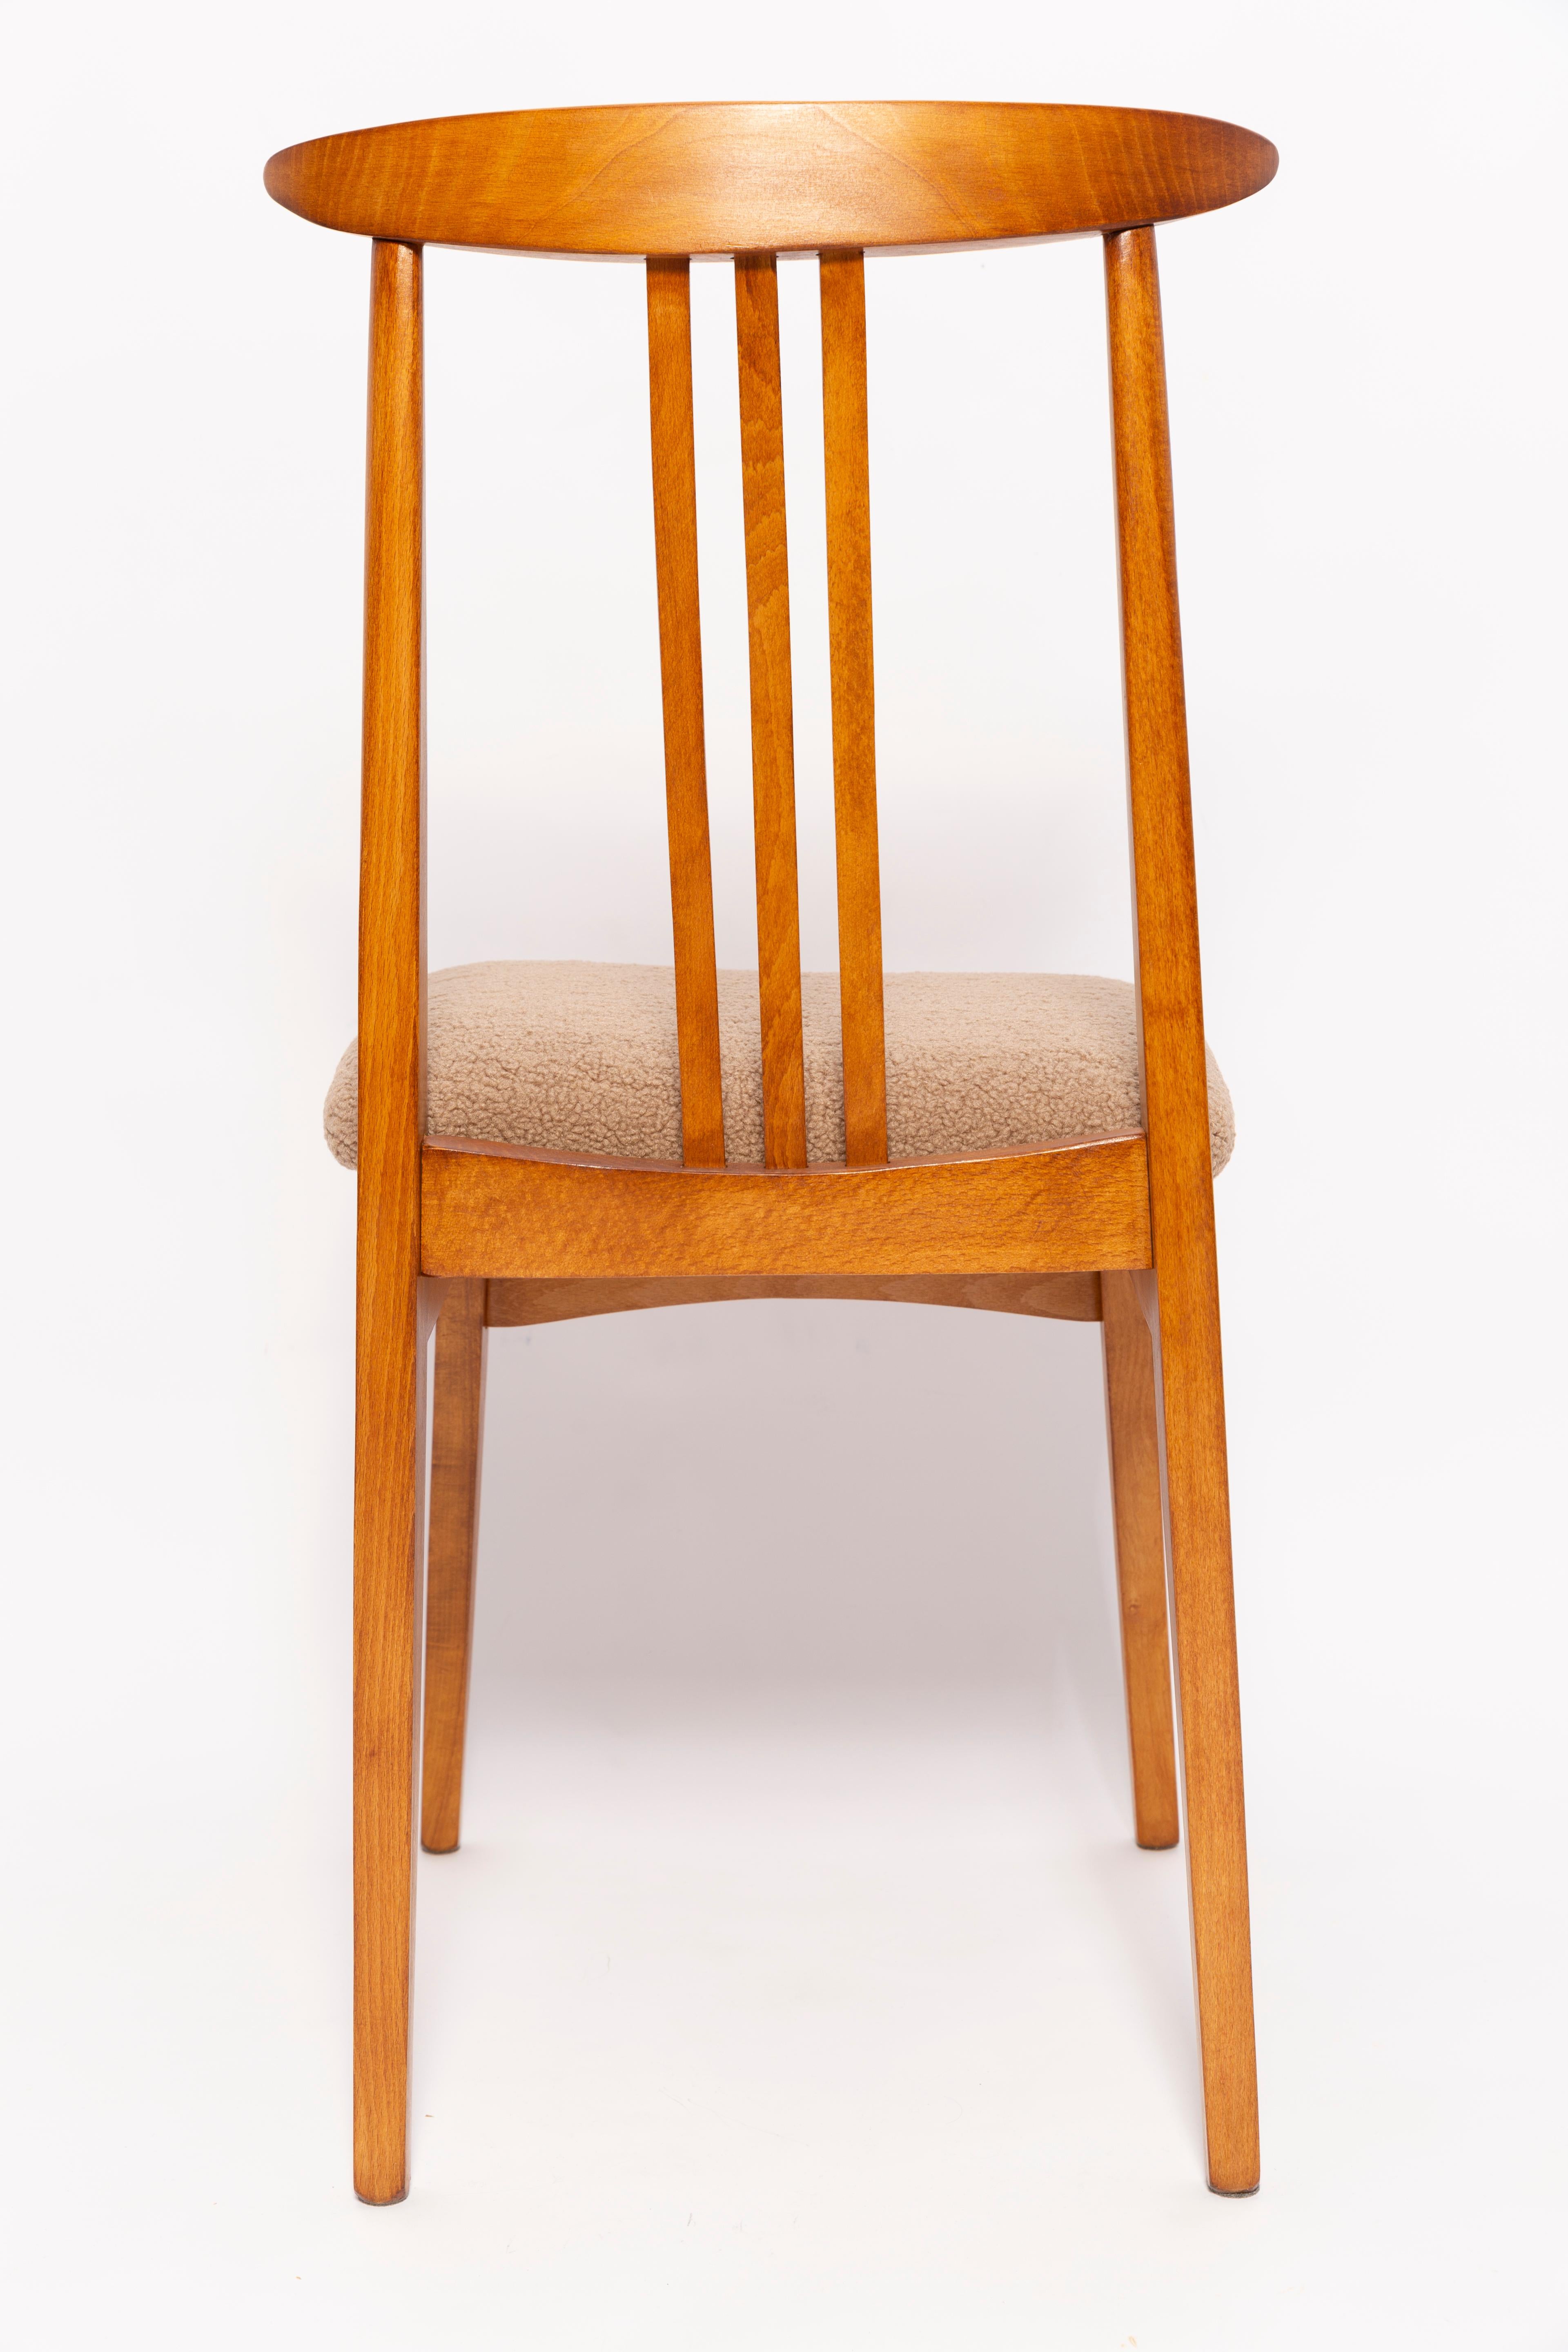 Polish Mid-Century Latte Boucle Chair, Medium Wood, M. Zielinski, Europe 1960s For Sale